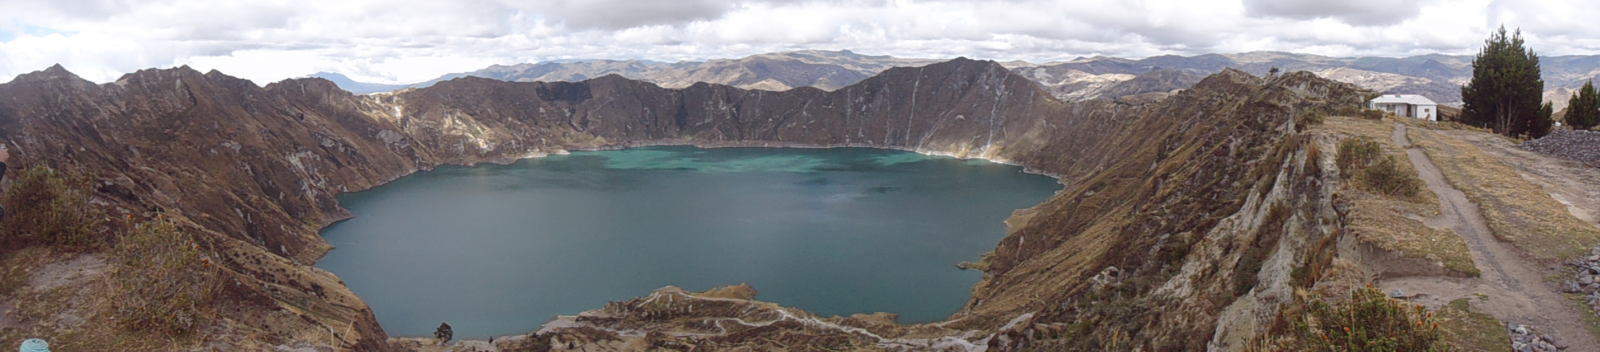 jazero v kratere sopky quilotoa ecuador